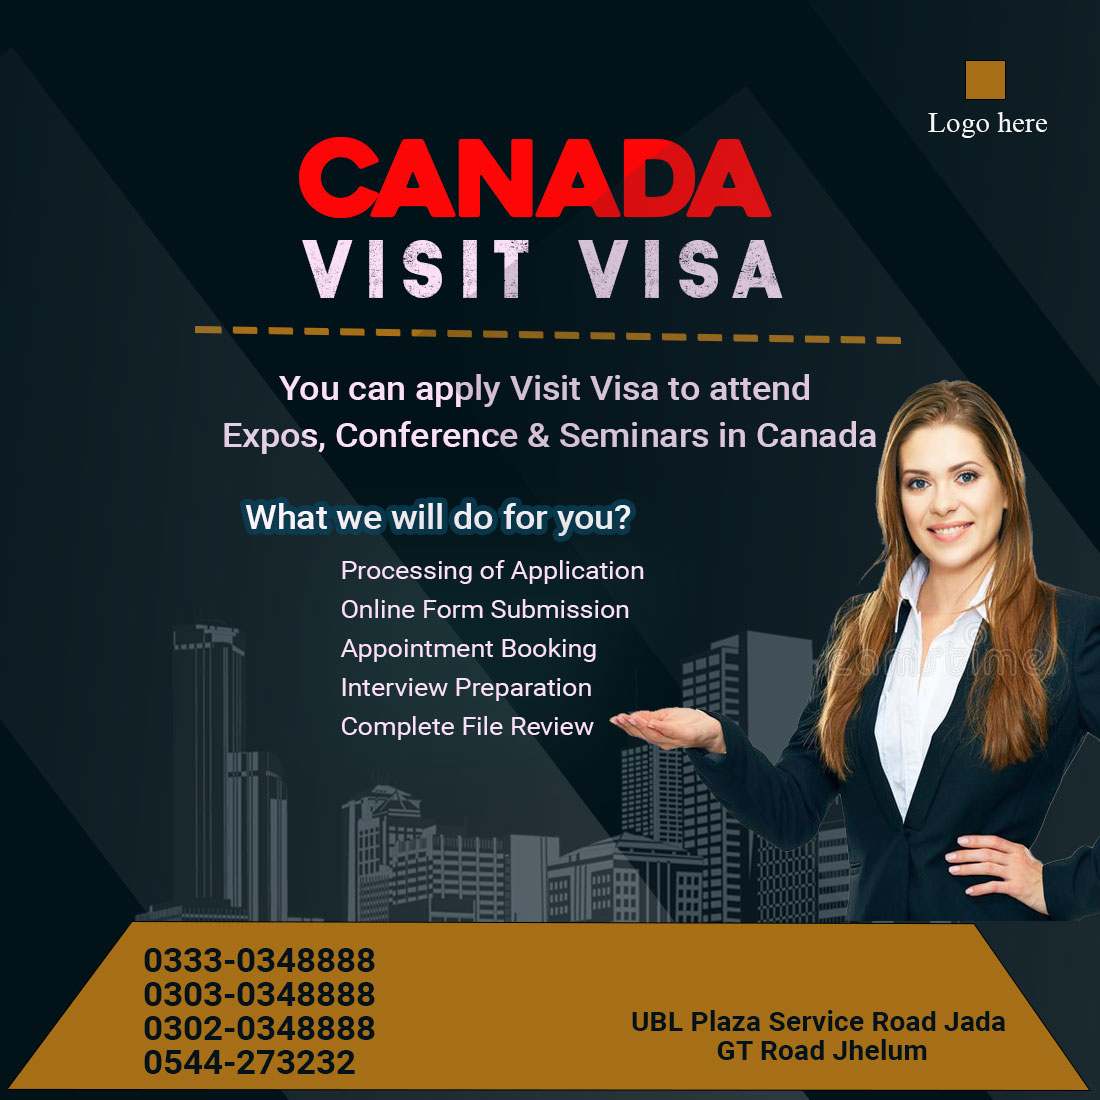 CANADA VISIT VISA| cool post design cover image.